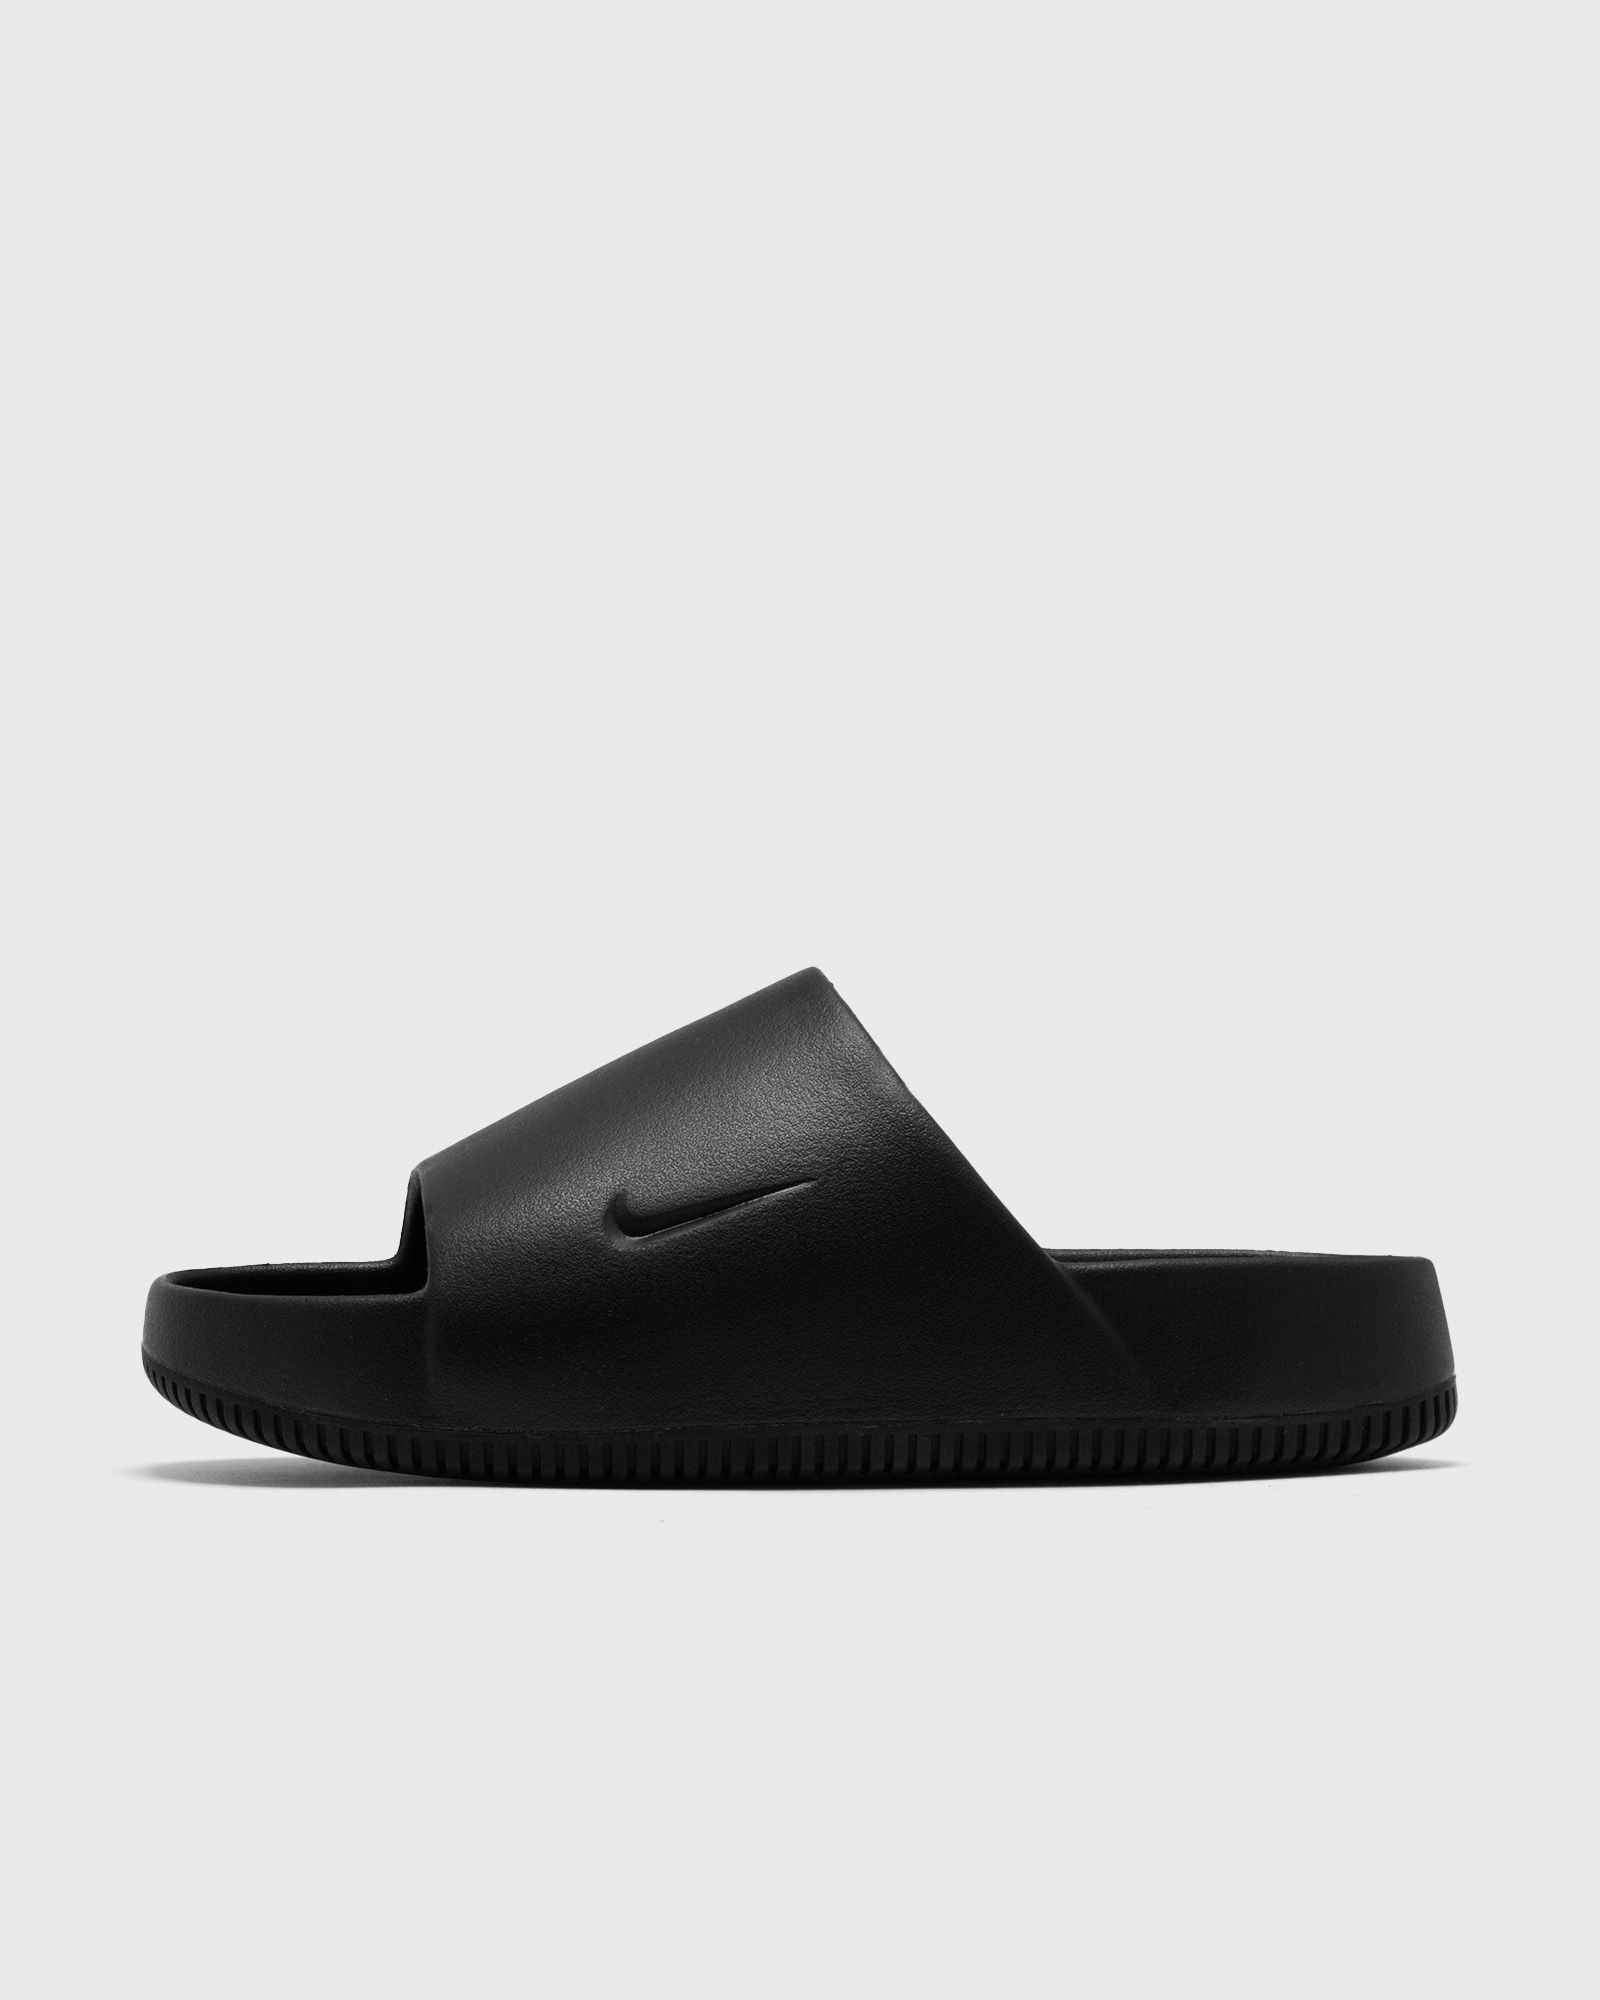 Nike - calm slide men  black in größe:41